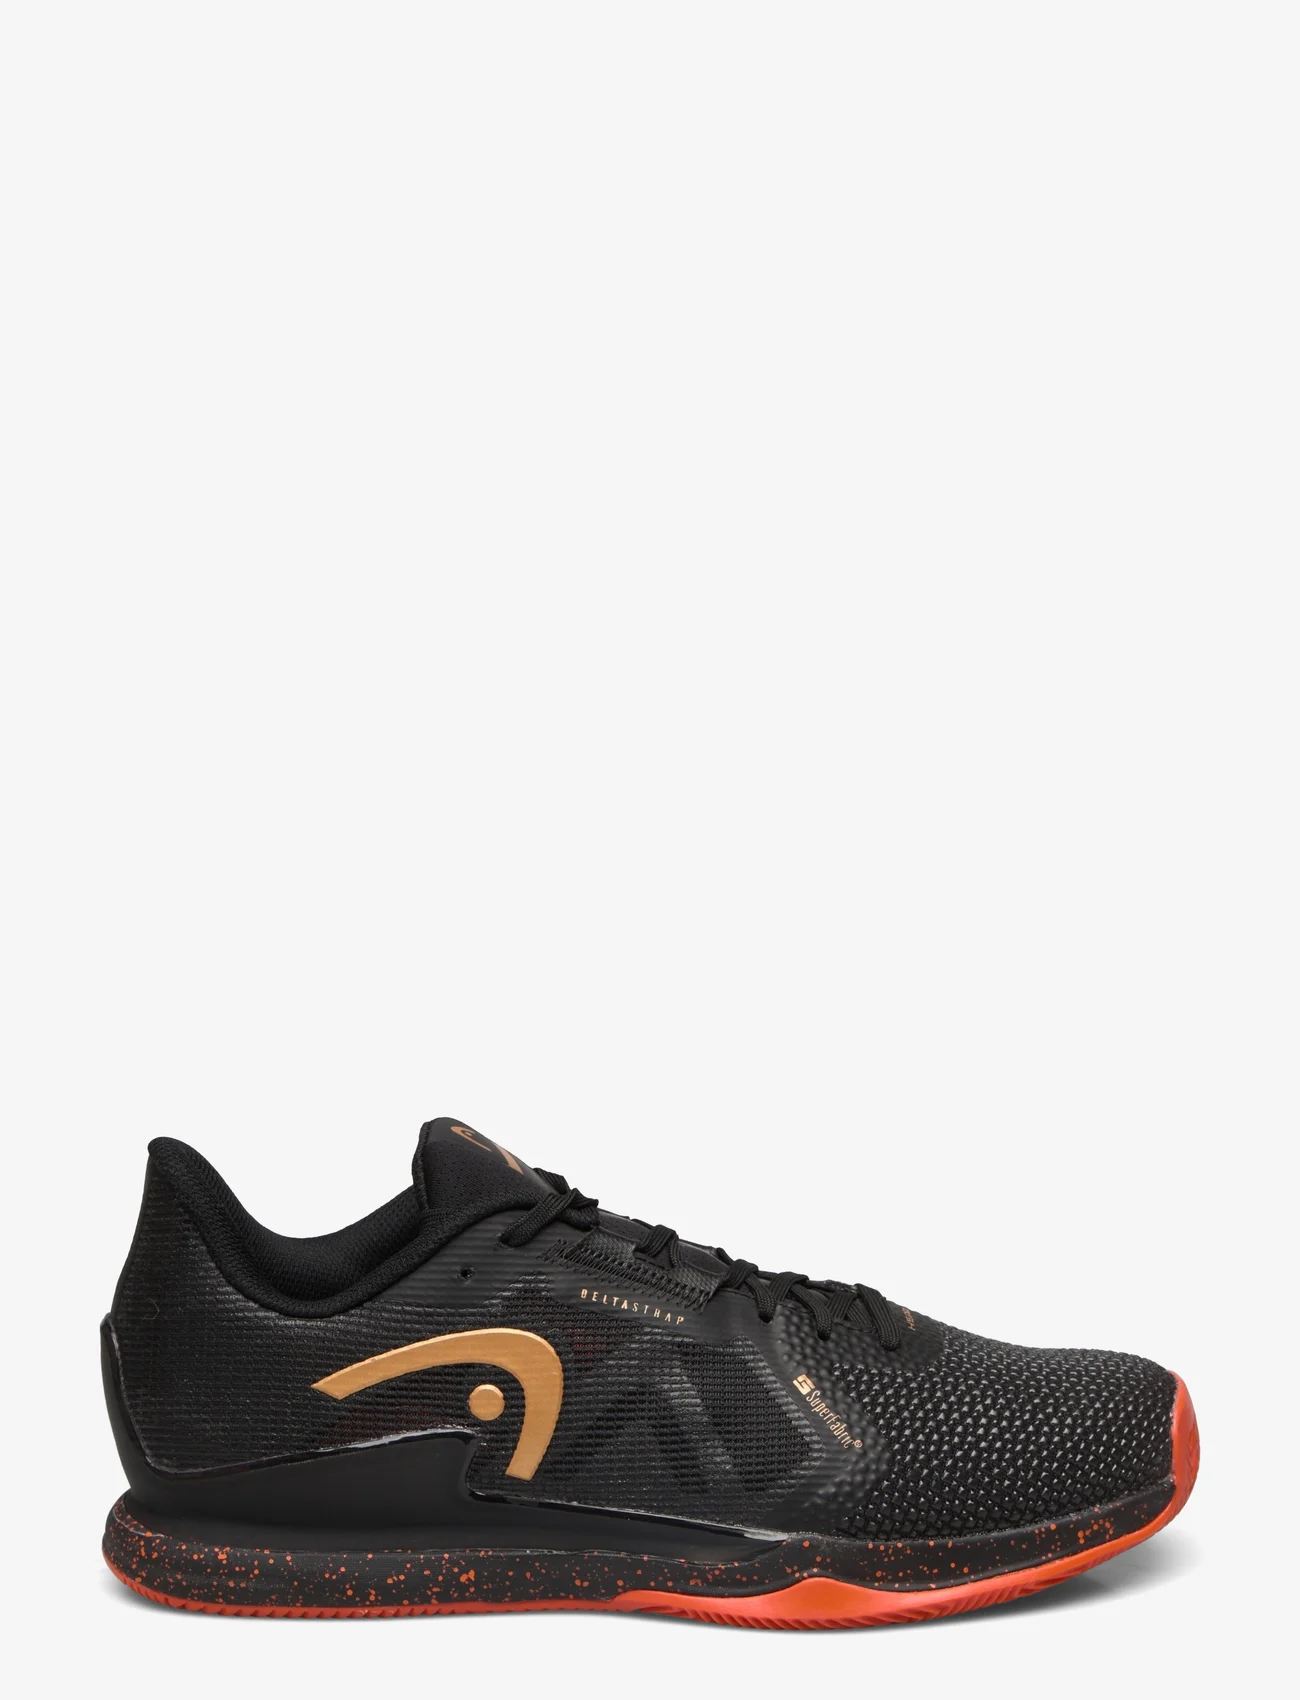 Head - HEAD Sprint Pro 3.5 SF Clay Tennis Shoes - rakešu sporta veidu apavi - black/orange - 1